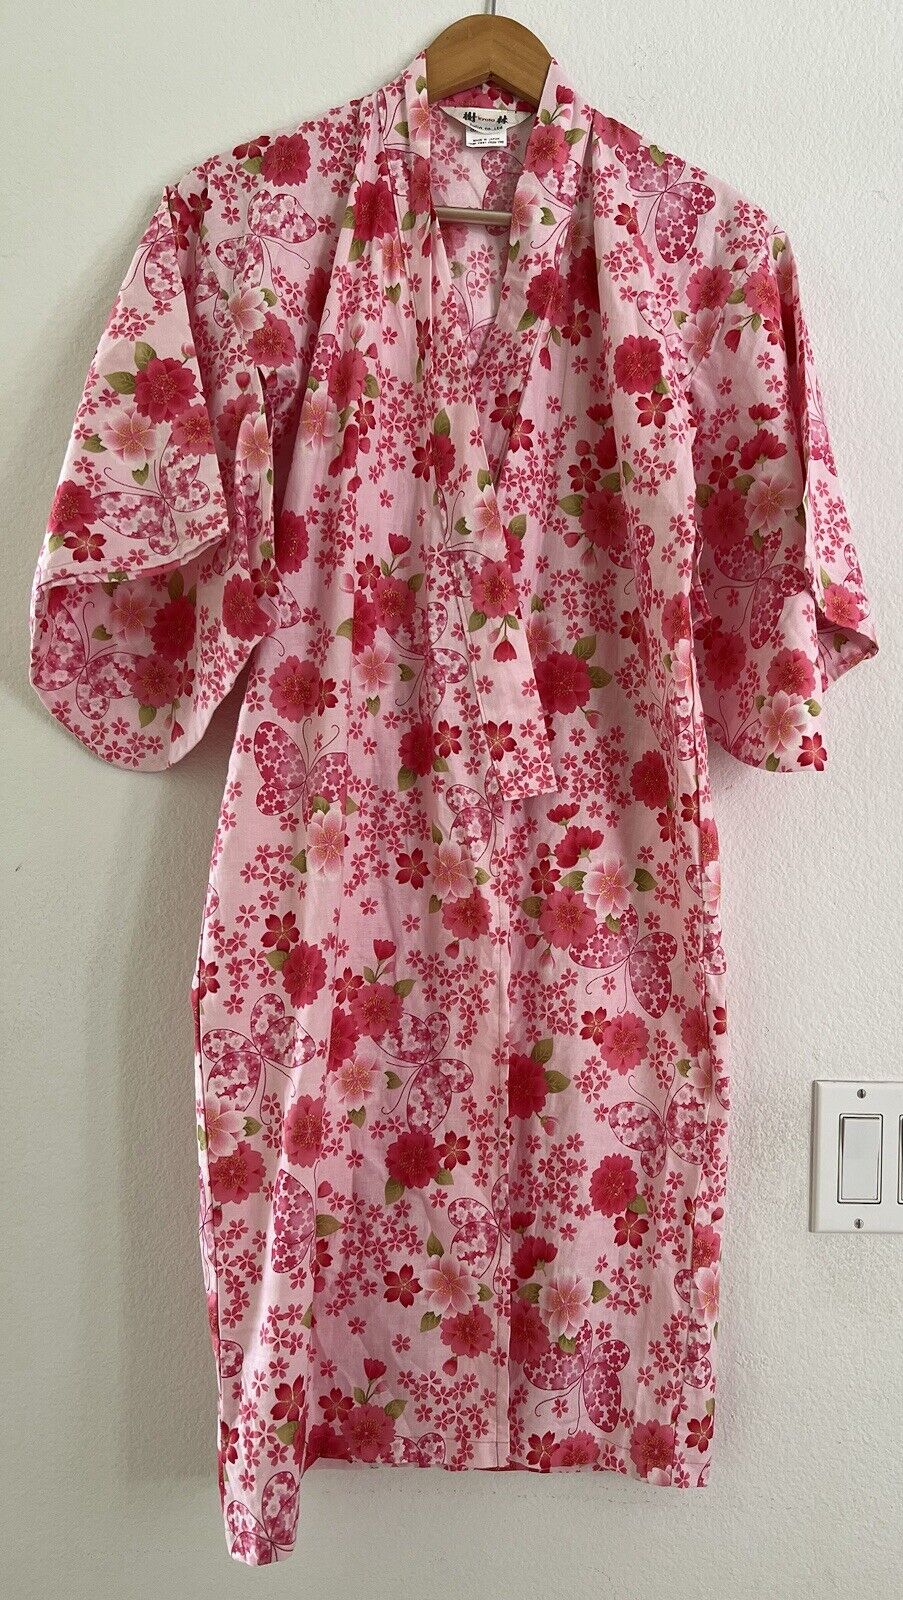 Kyoto Julin Co. Ltd Japan Cotton Kimono Pink Red Floral Print Size/Length 40 in